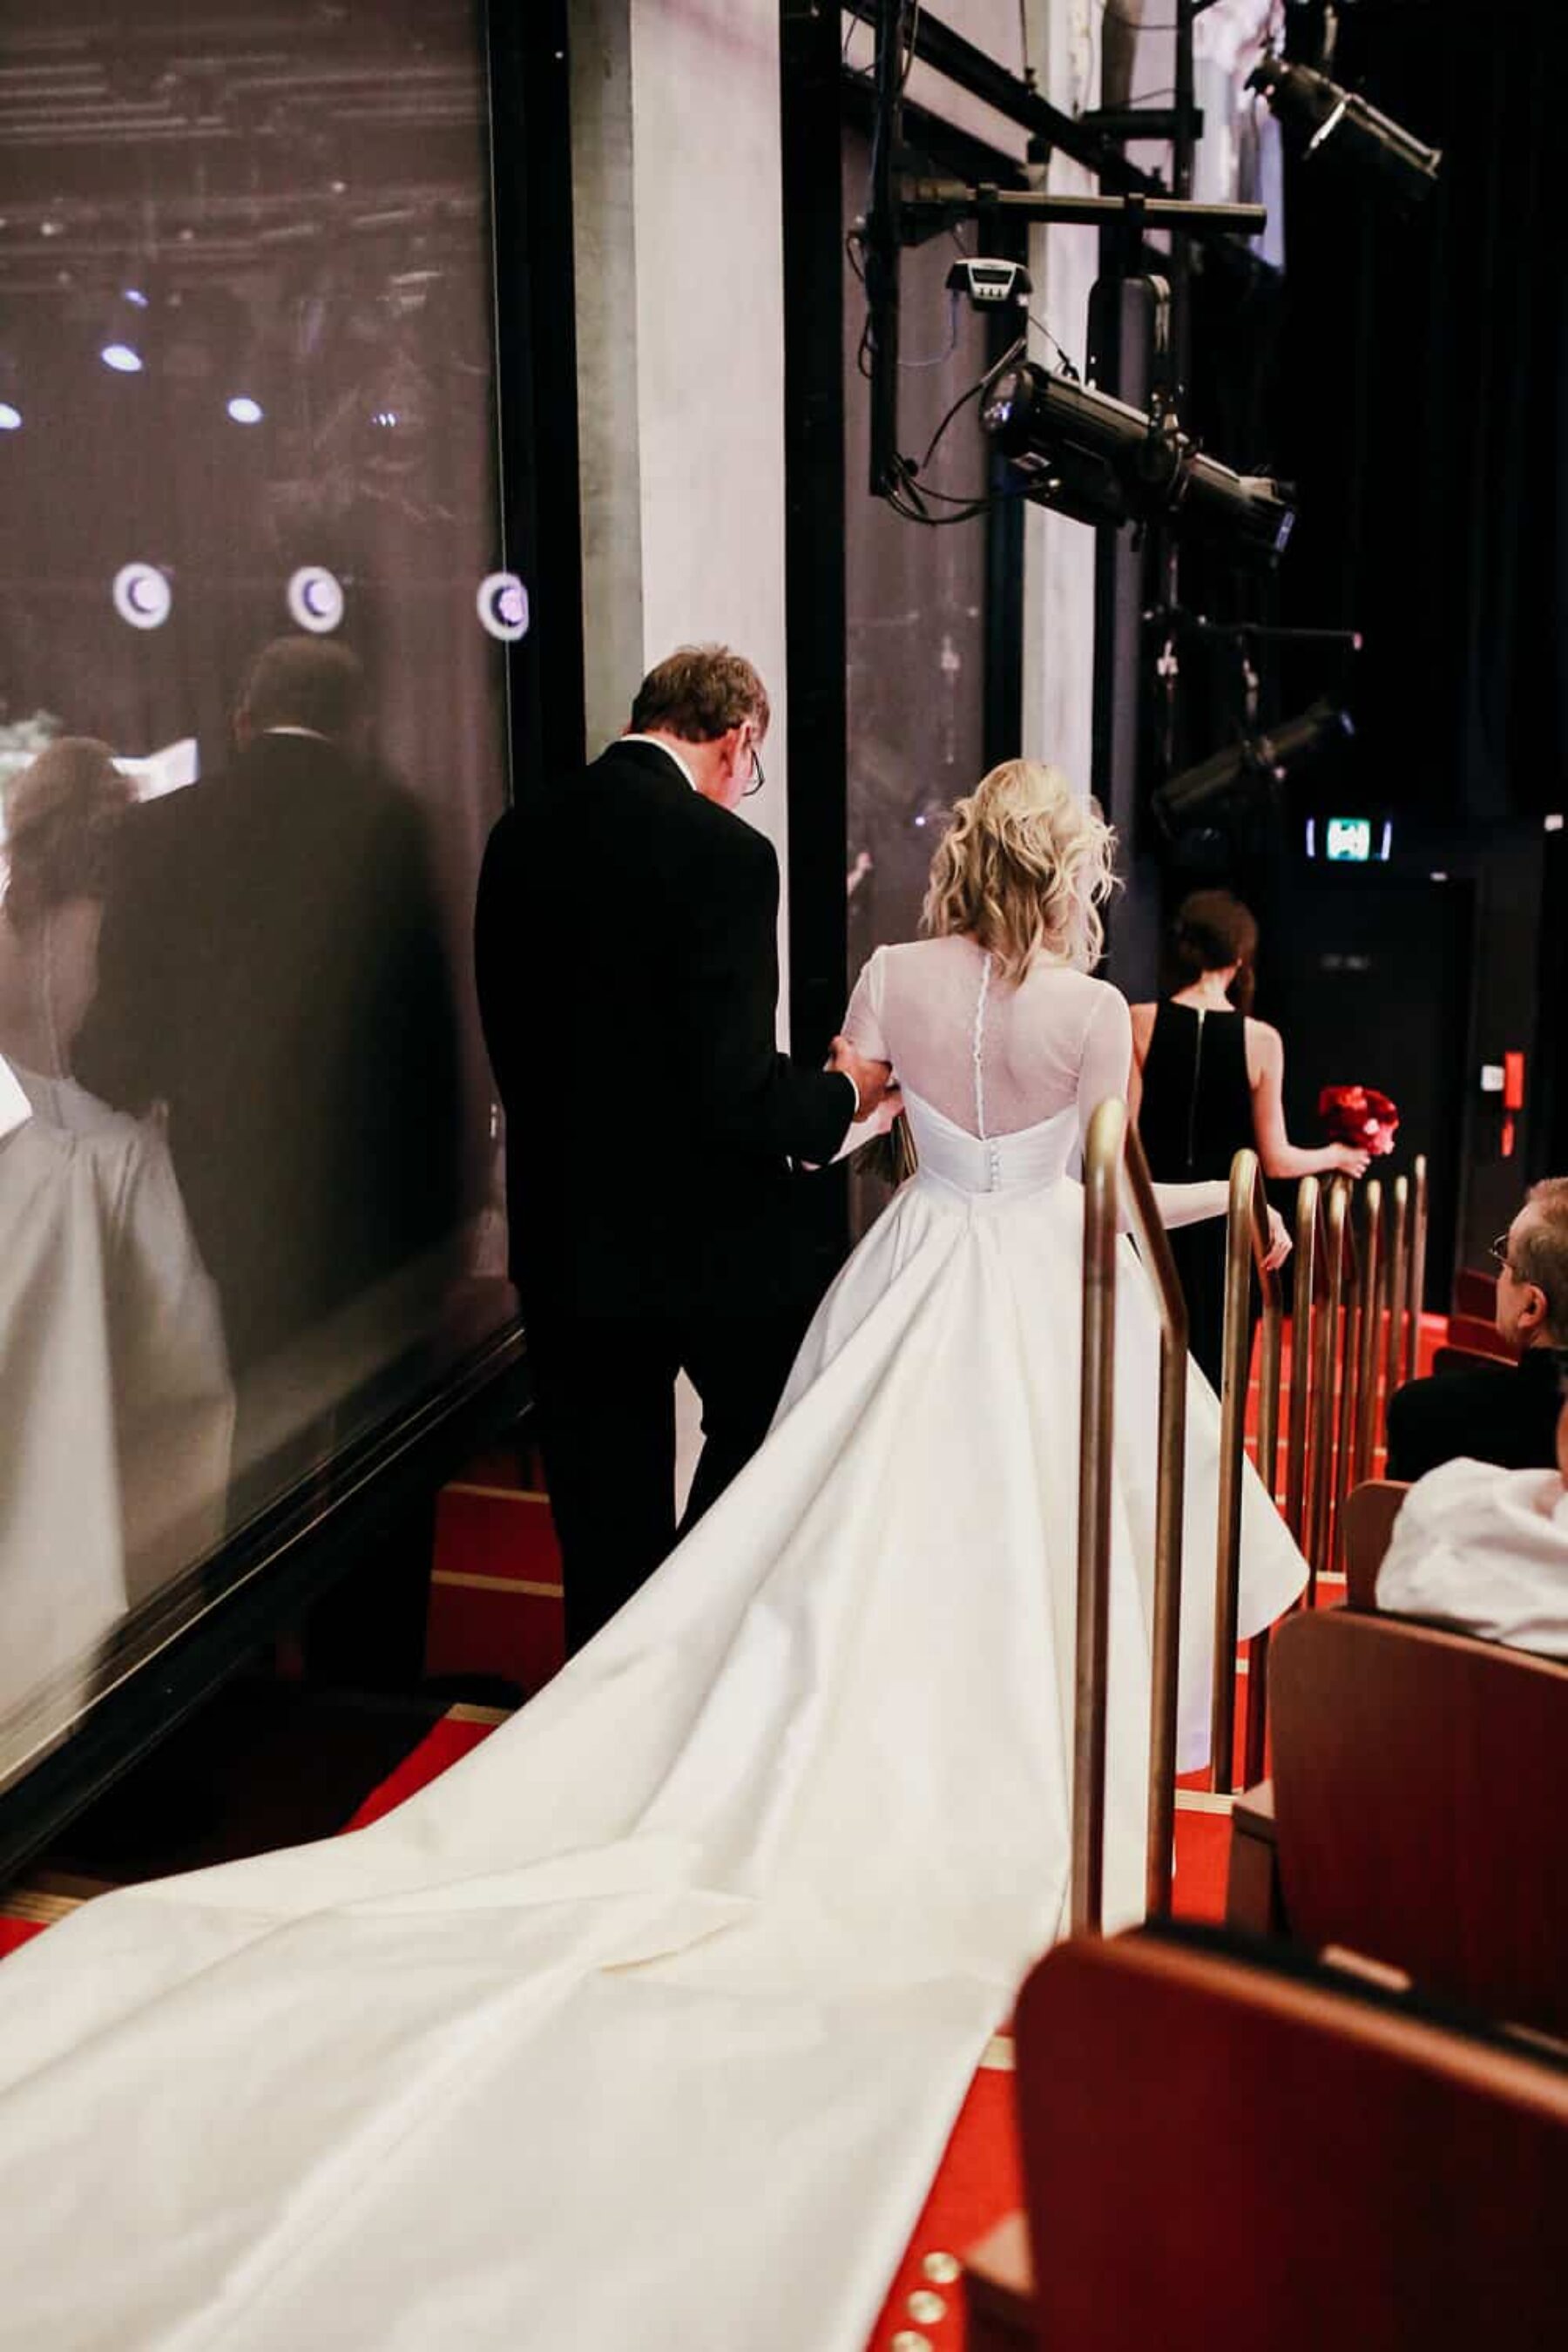 Epic Sydney wedding at Eternity Playhouse - photography by Lara Hotz